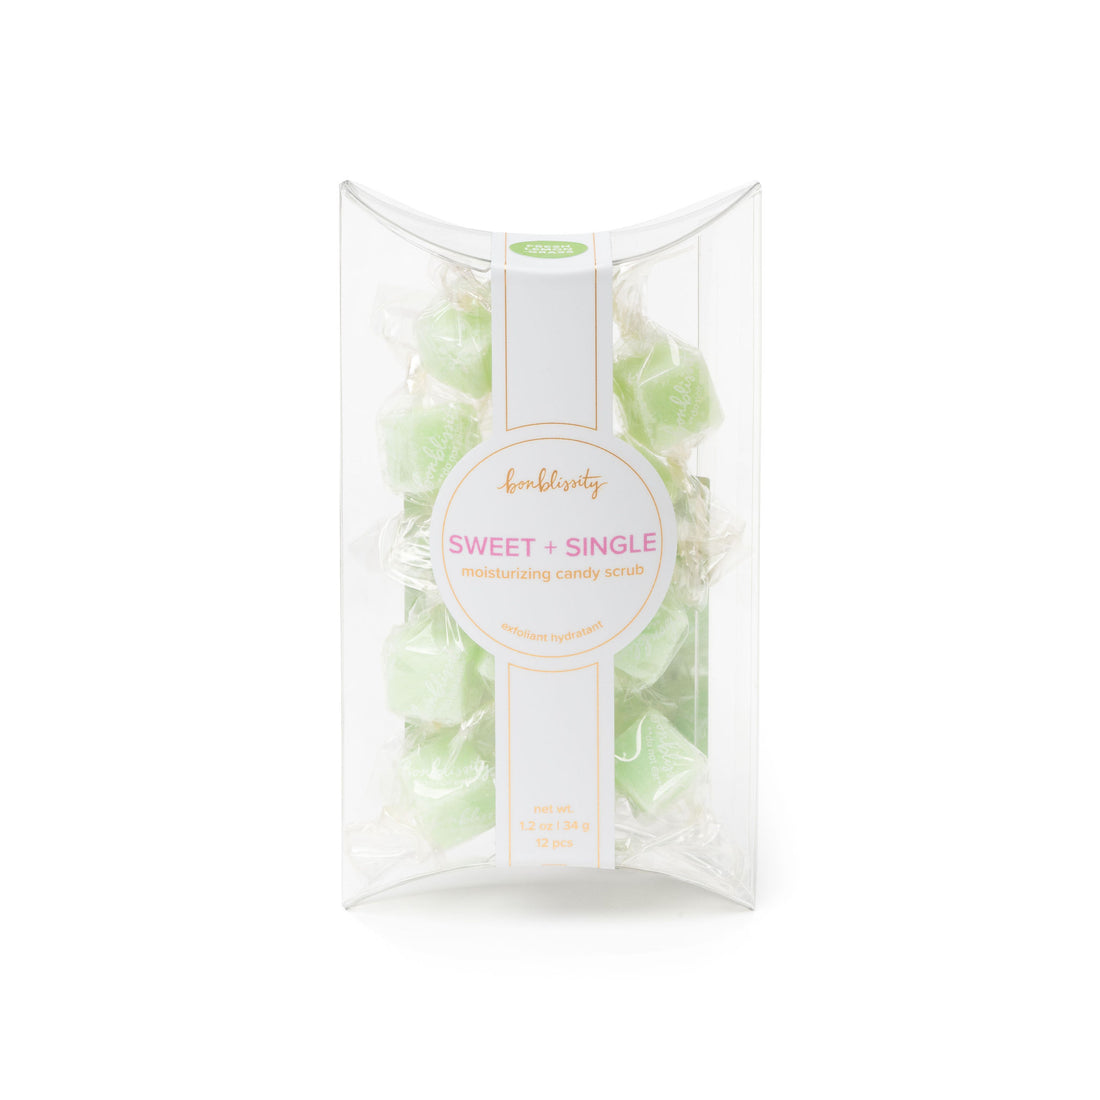 Mini-Me Pack: Sugar Cube Candy Scrub - Fresh Lemongrass